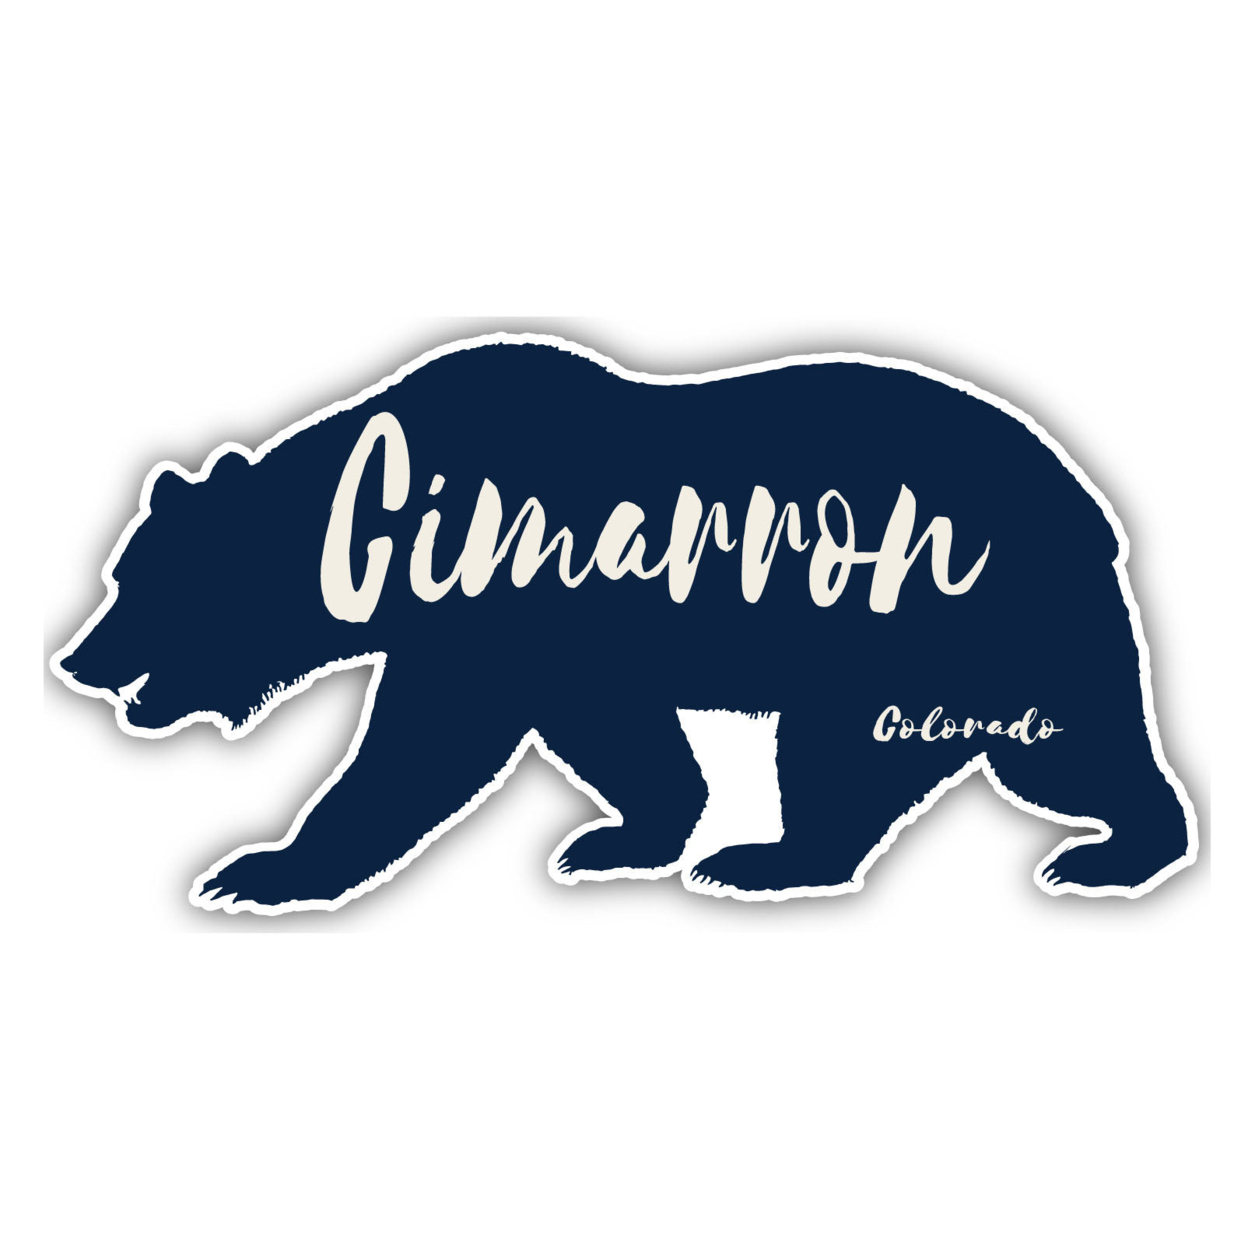 Cimarron Colorado Souvenir Decorative Stickers (Choose Theme And Size) - 4-Pack, 8-Inch, Bear